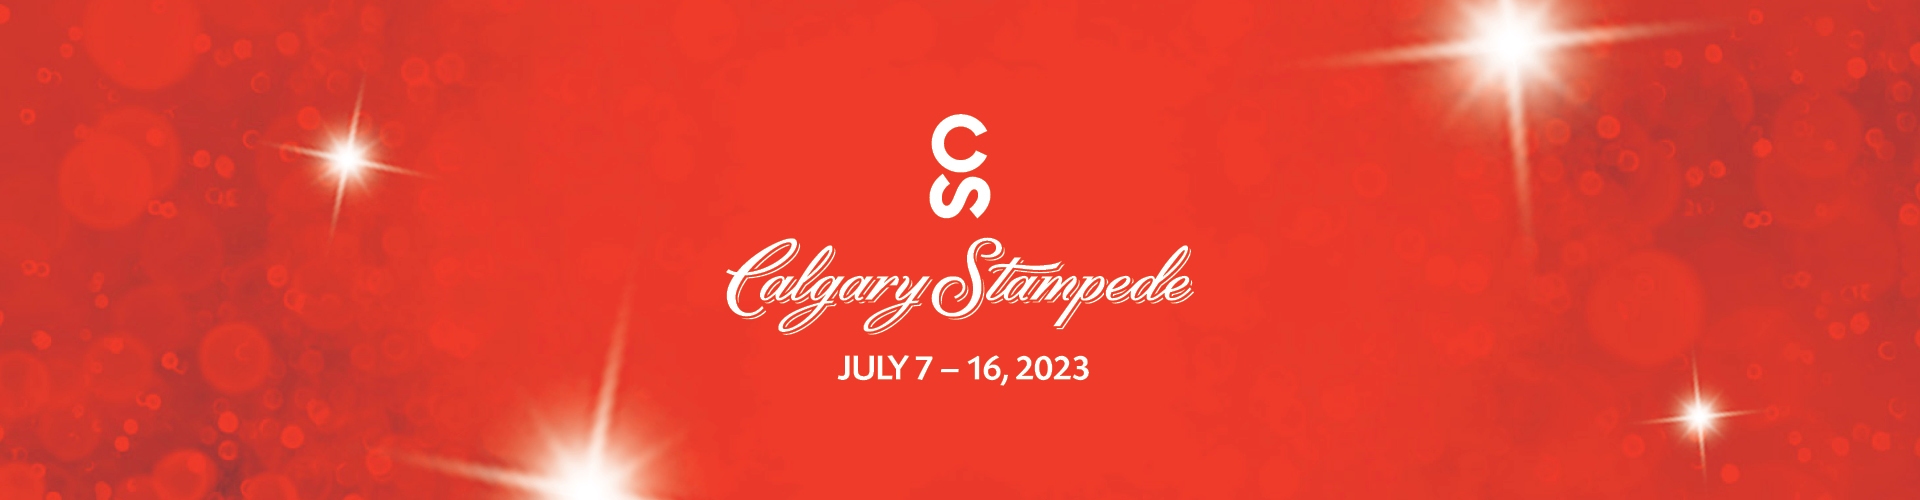 Calgary stampede